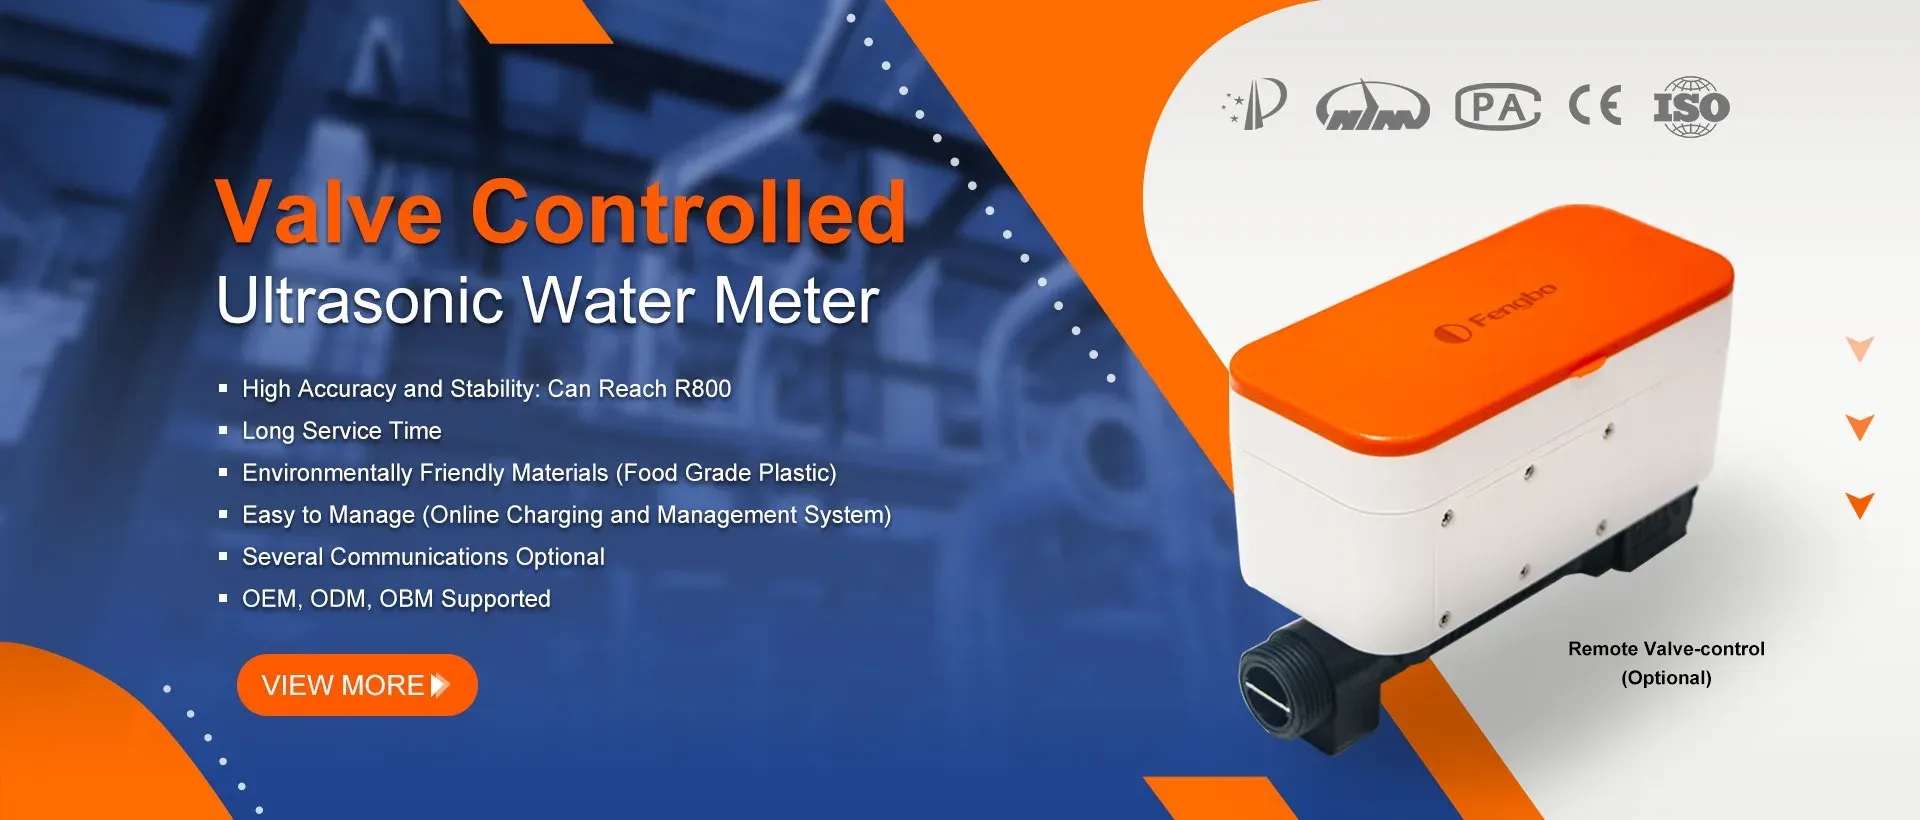 Valve controlled ultrasonic water meter